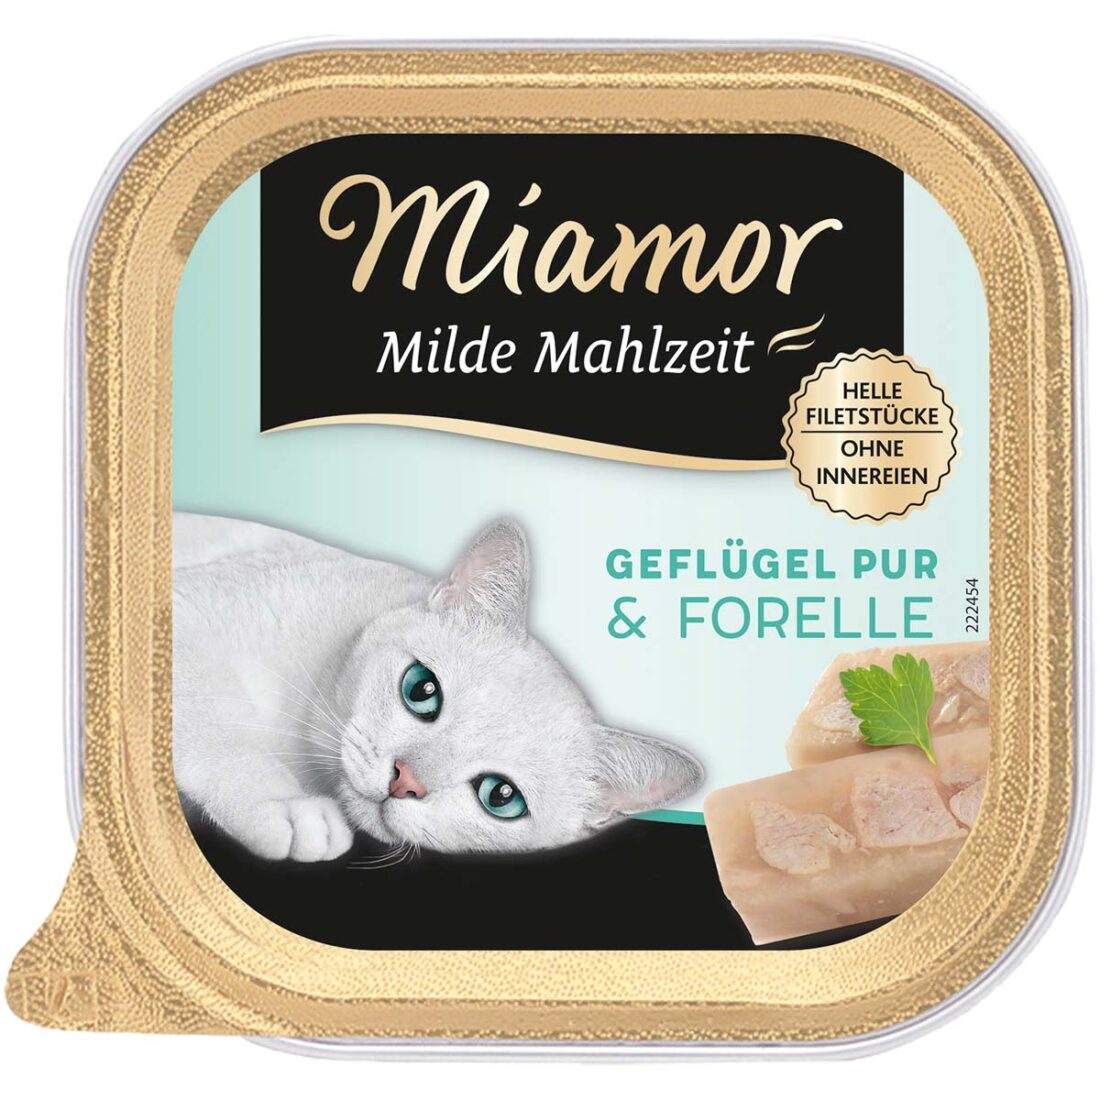 Miamor Milde Mahlzeit